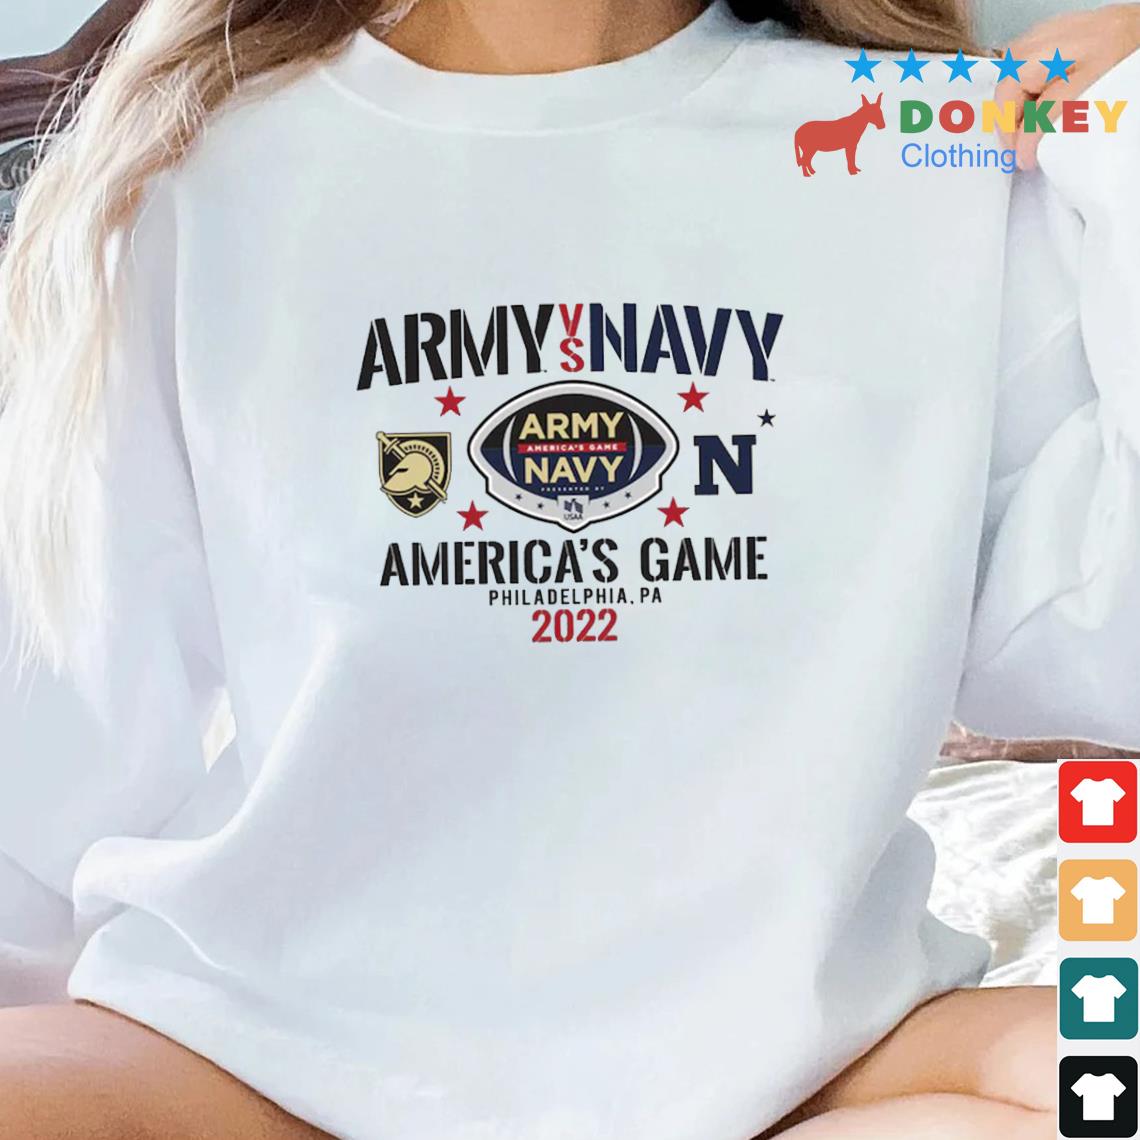 Army Black Knights vs. Navy Midshipmen 2022 Football America's Game Shirt